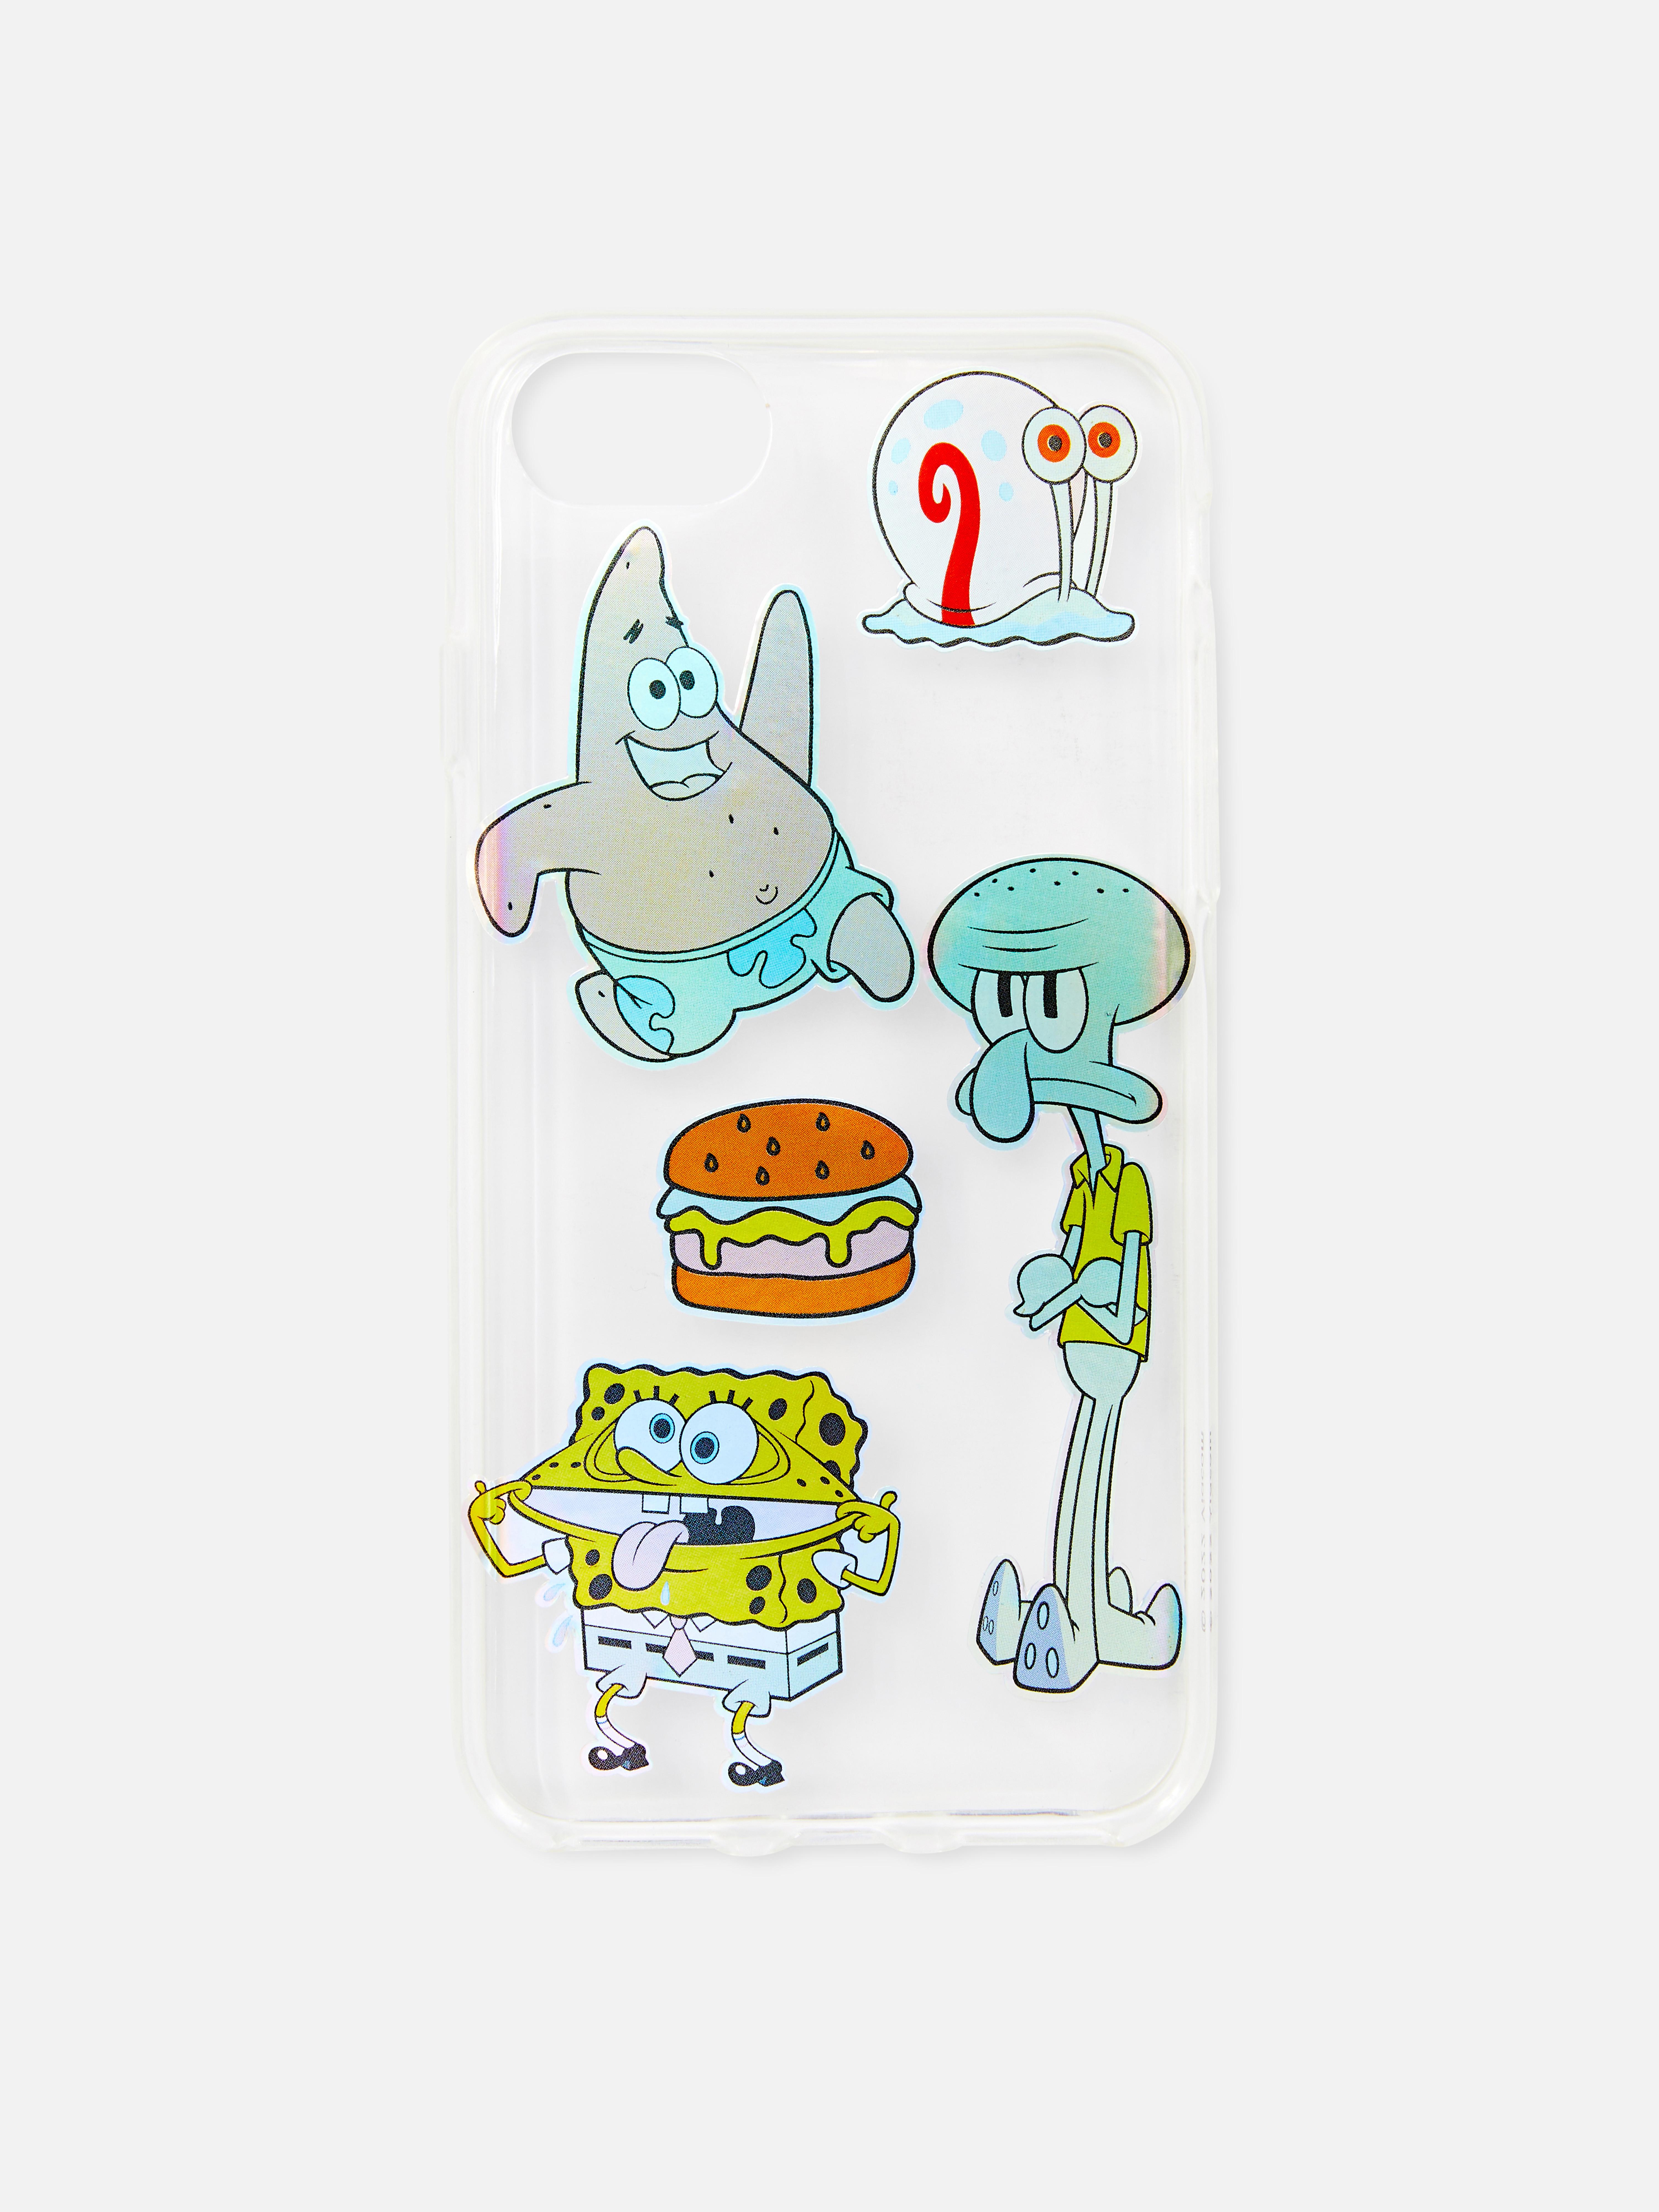 Spongebob Squarepants iPhone Case